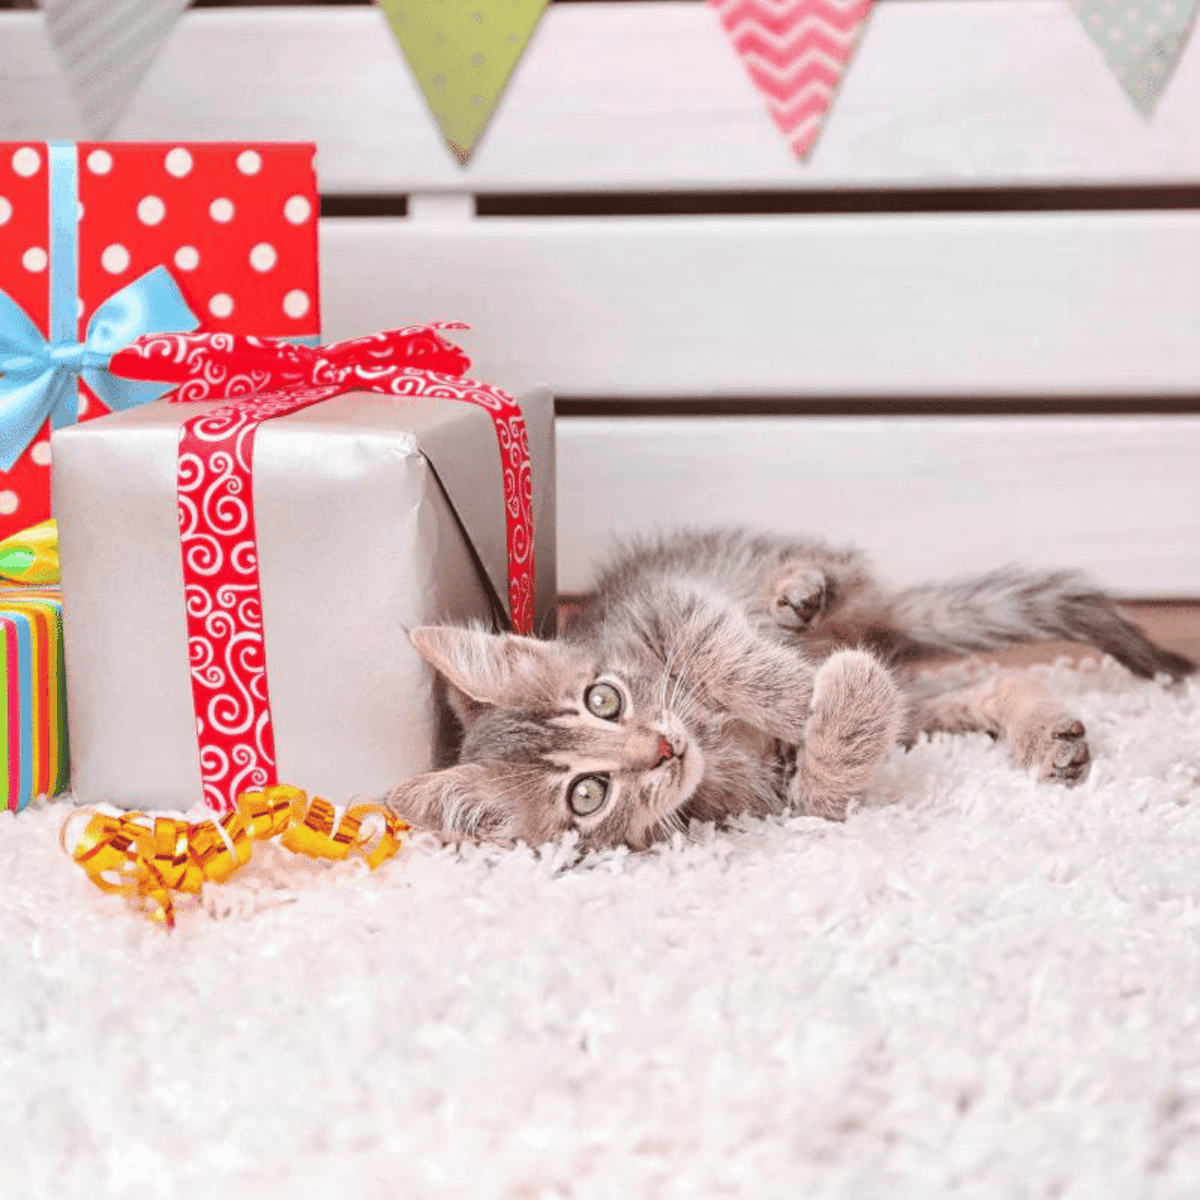 Cat Birthday Party, Cat Toys, Cat Treats, Cat Supplies 